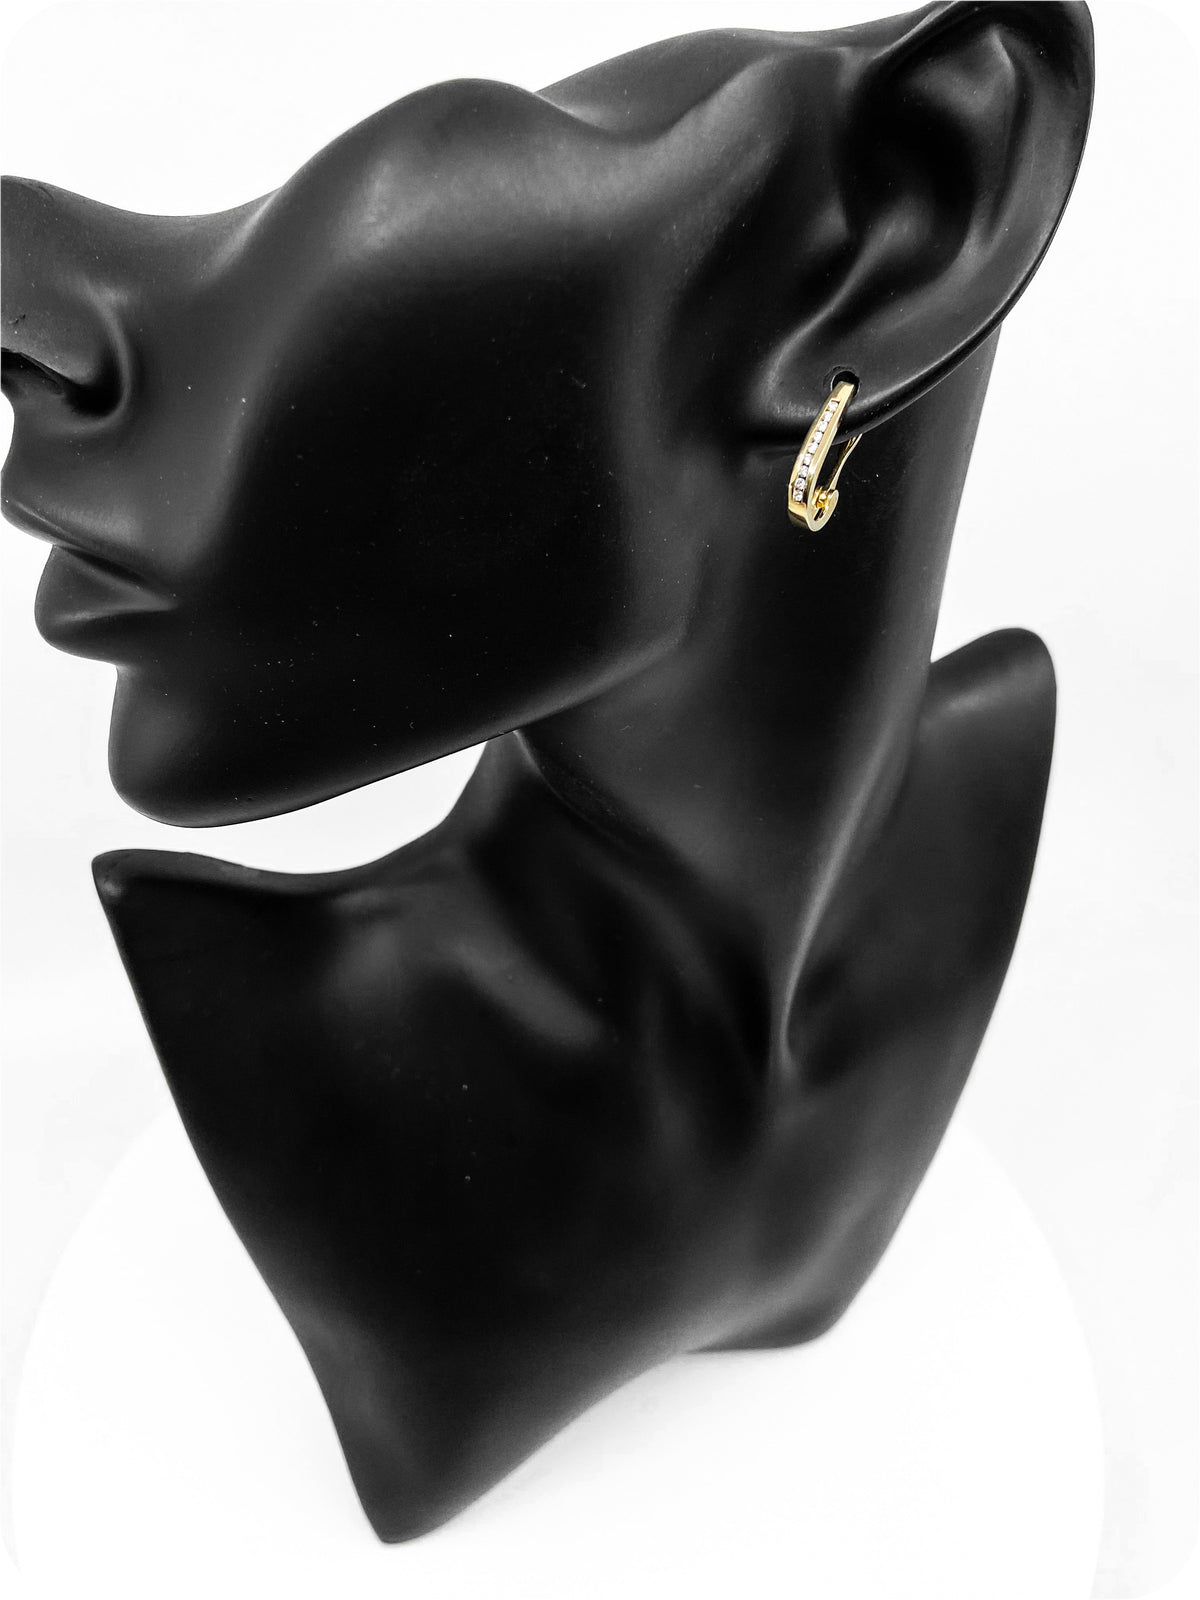 10K Yellow Gold 1.00 cttw Diamond Hoop Earrings